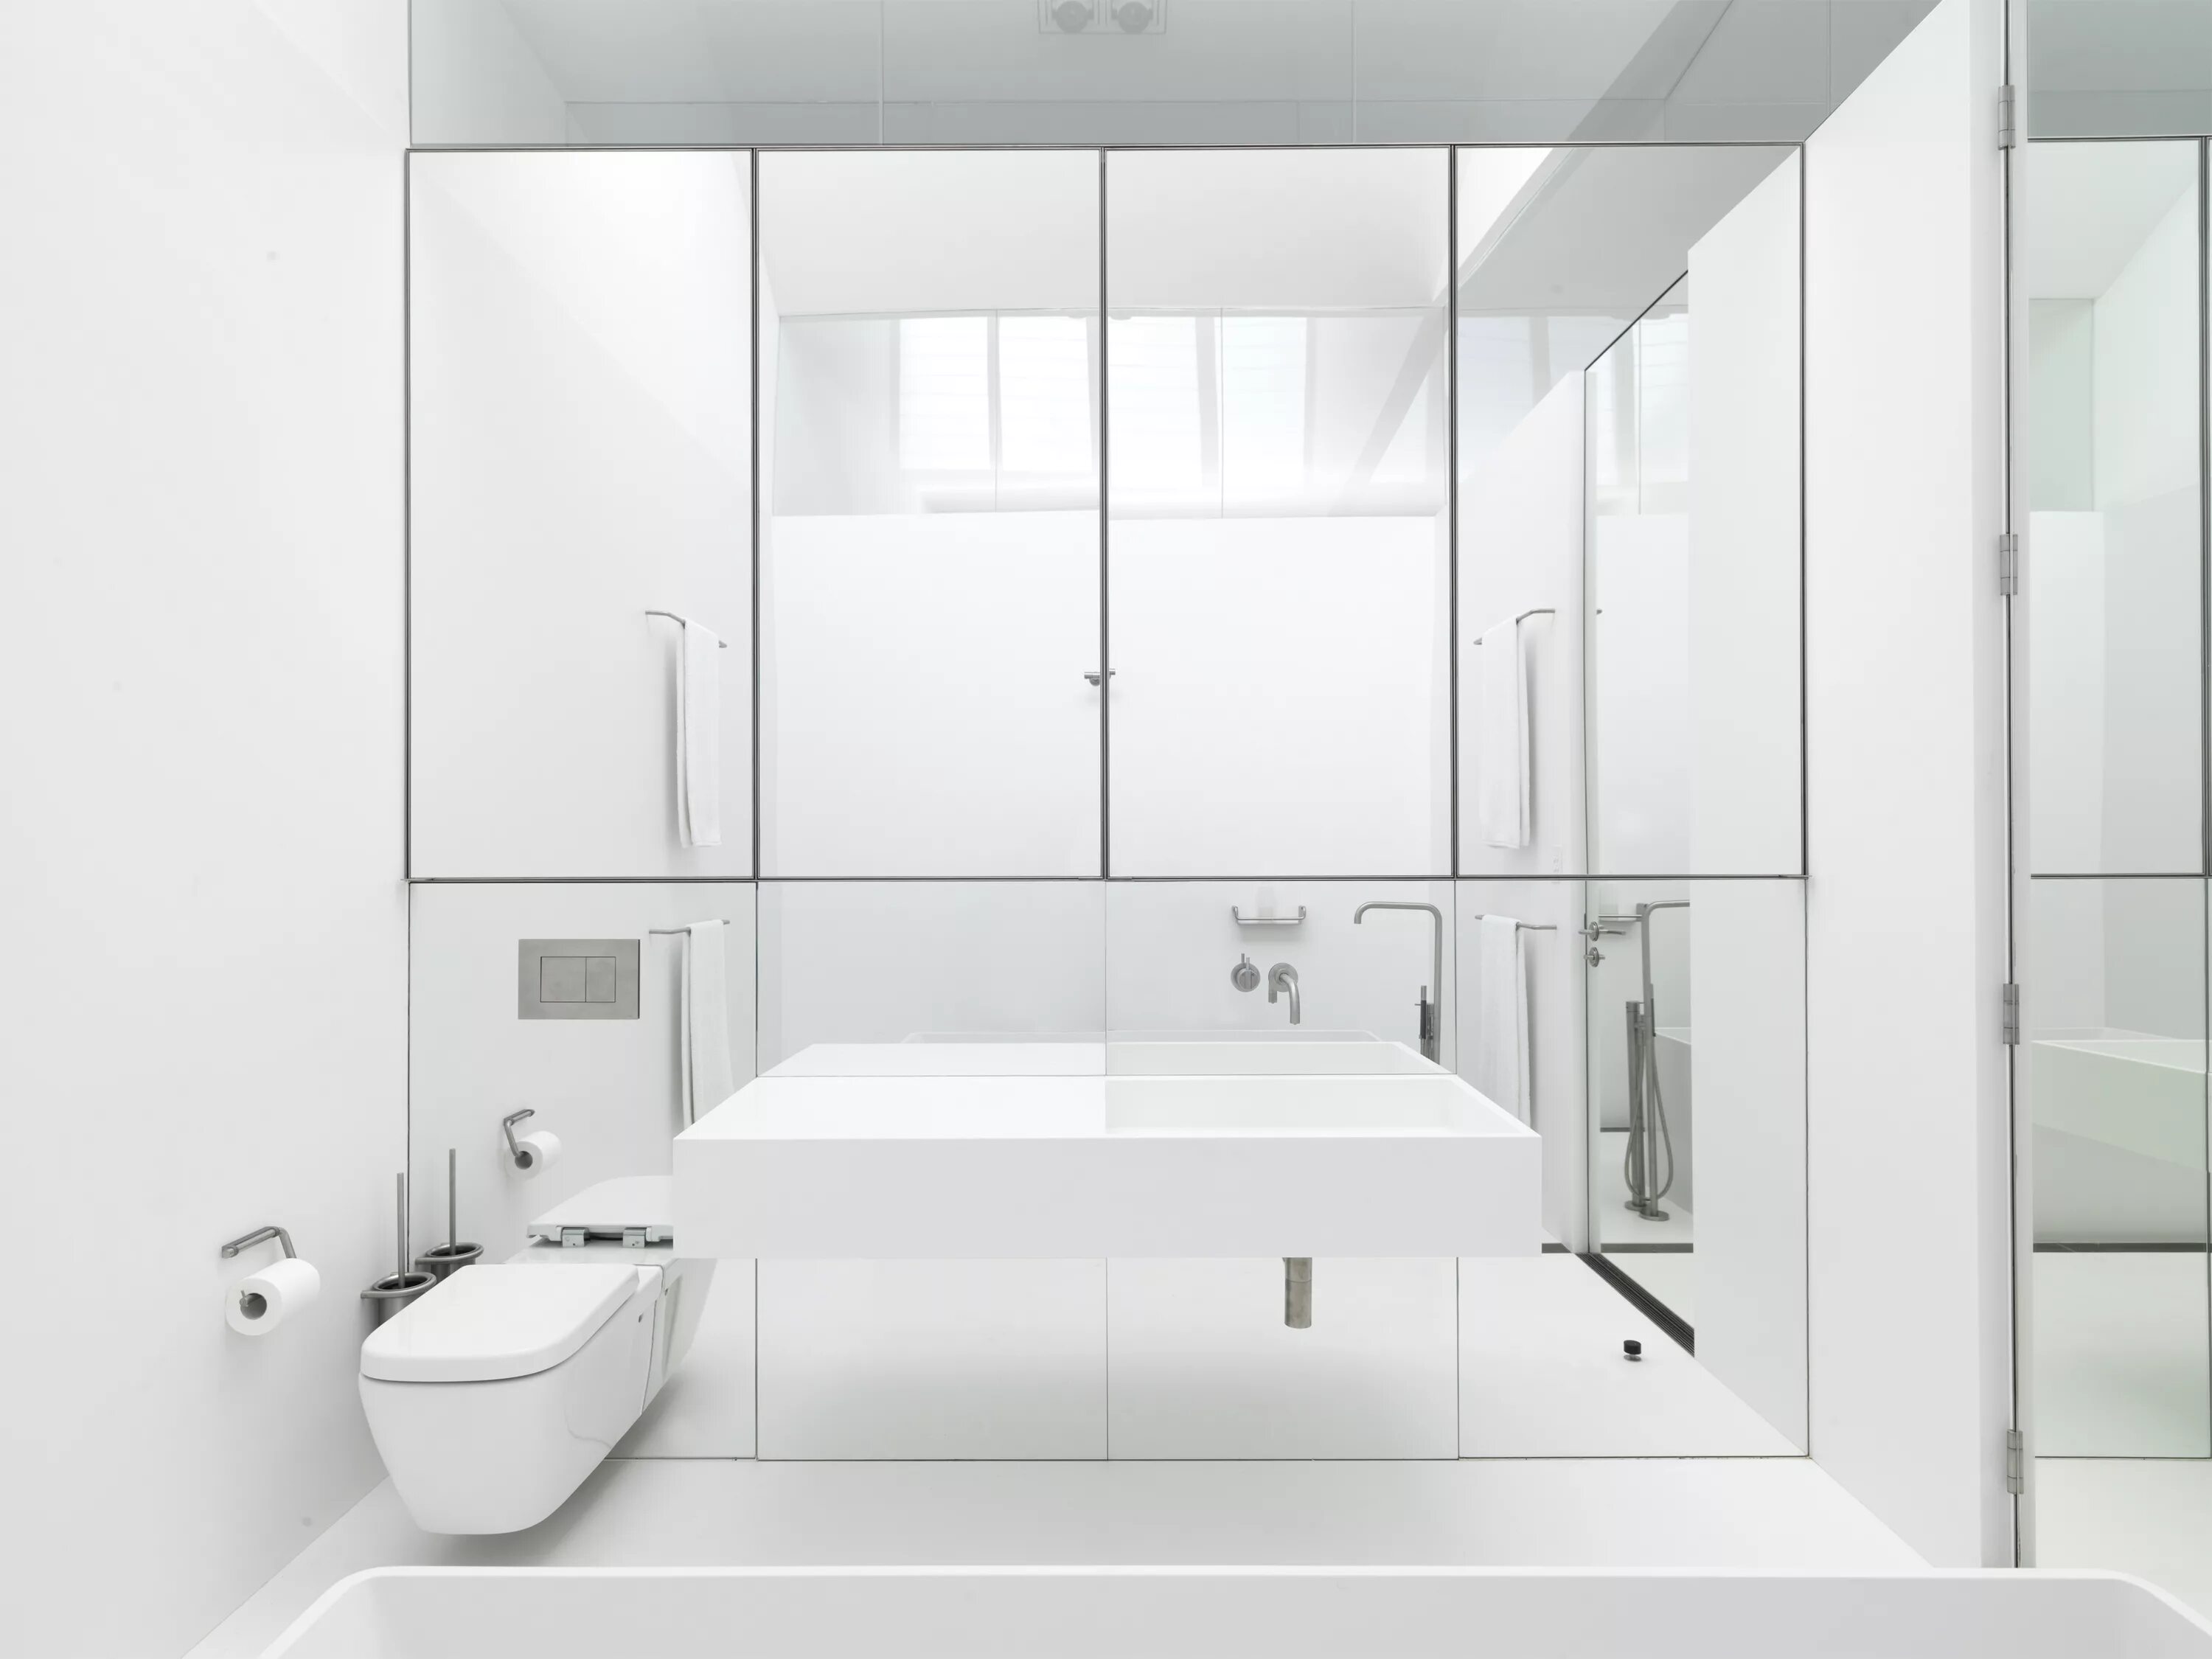 Зеркала в ванную белые. Ванная комната. Зеркальная стена в ванной. Белая ванная комната. Интерьер белой ванной комнаты.